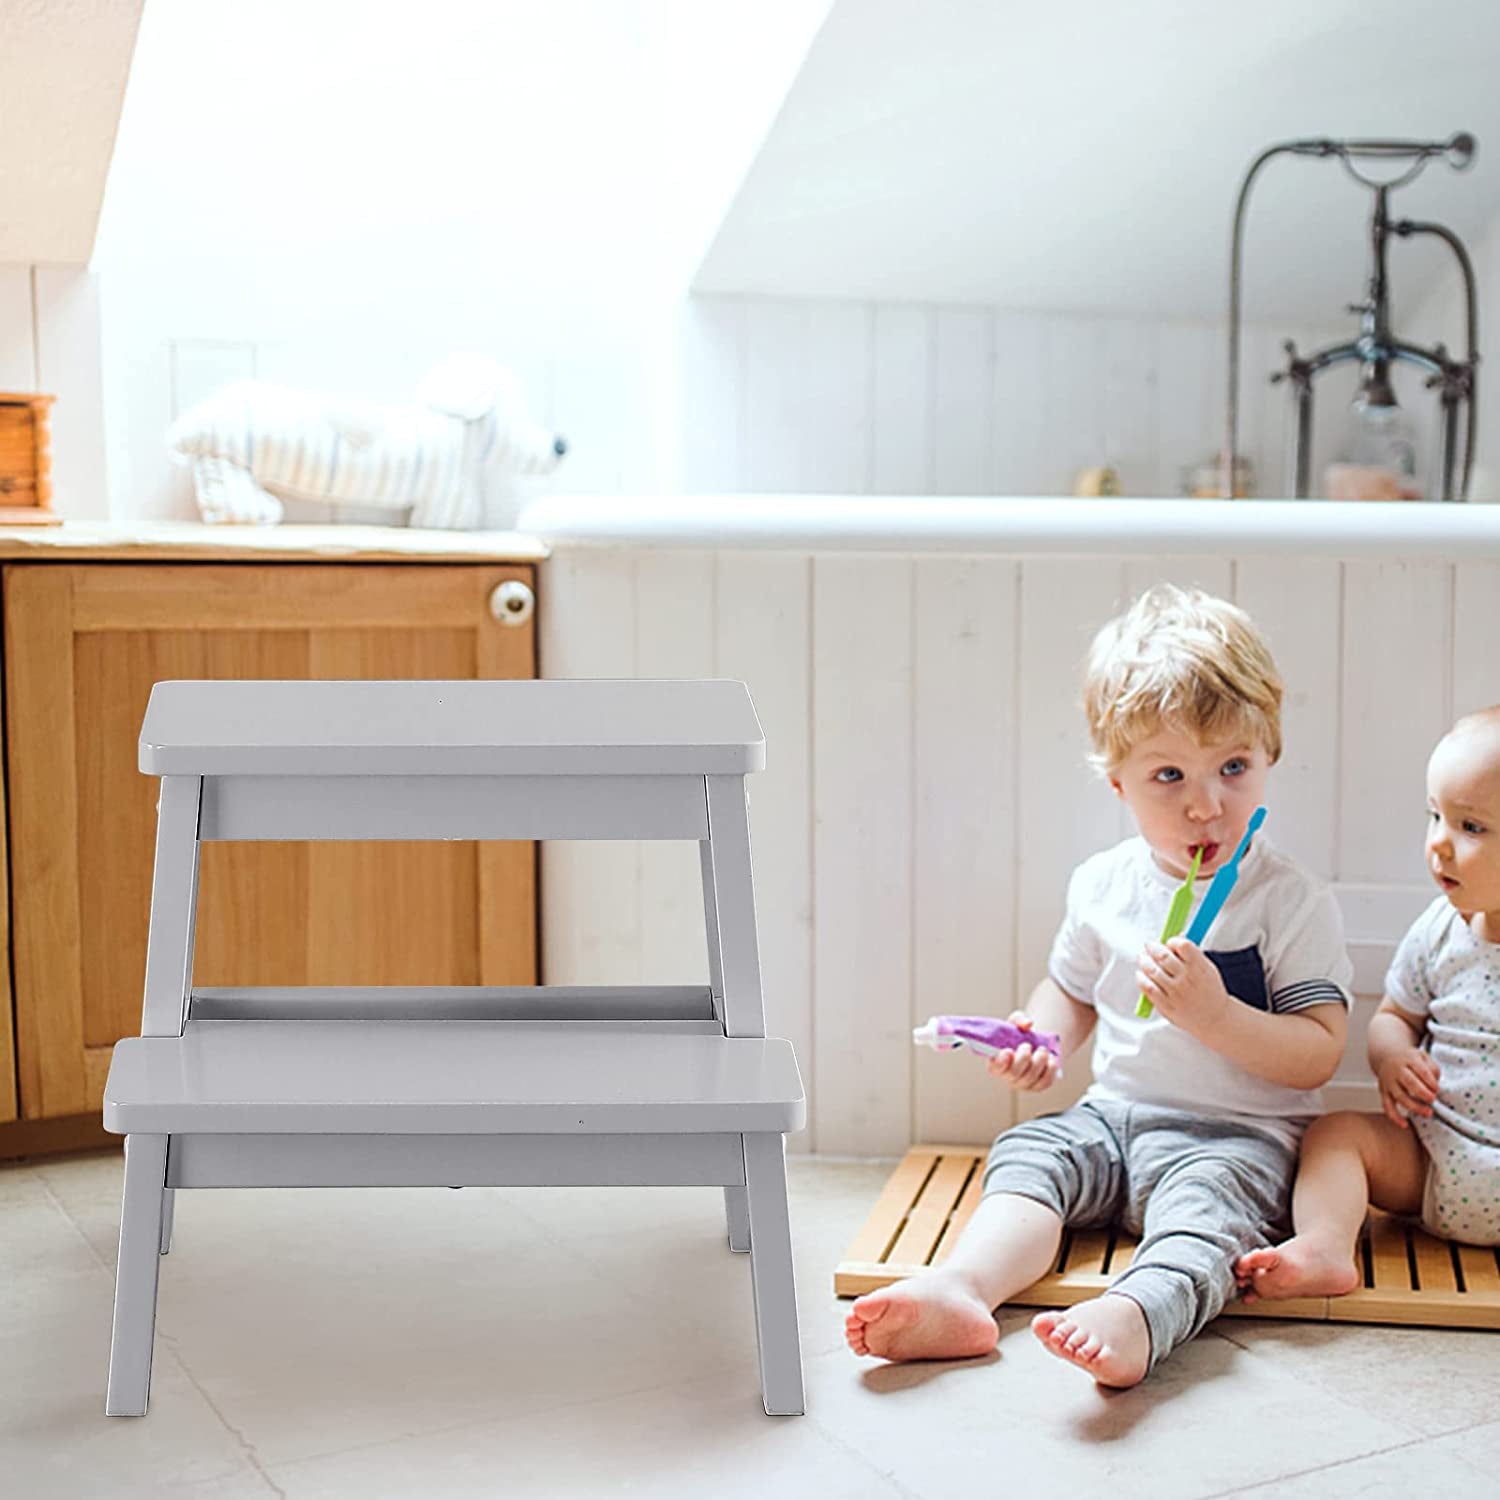 2 Steps Stool Wood Kids Stool, Multipurpose Children'S Stepladder Stool for Bedroom/Bathroom/Toilet/Kitchen Etc. with Safety Non-Slip Pads (Gray)